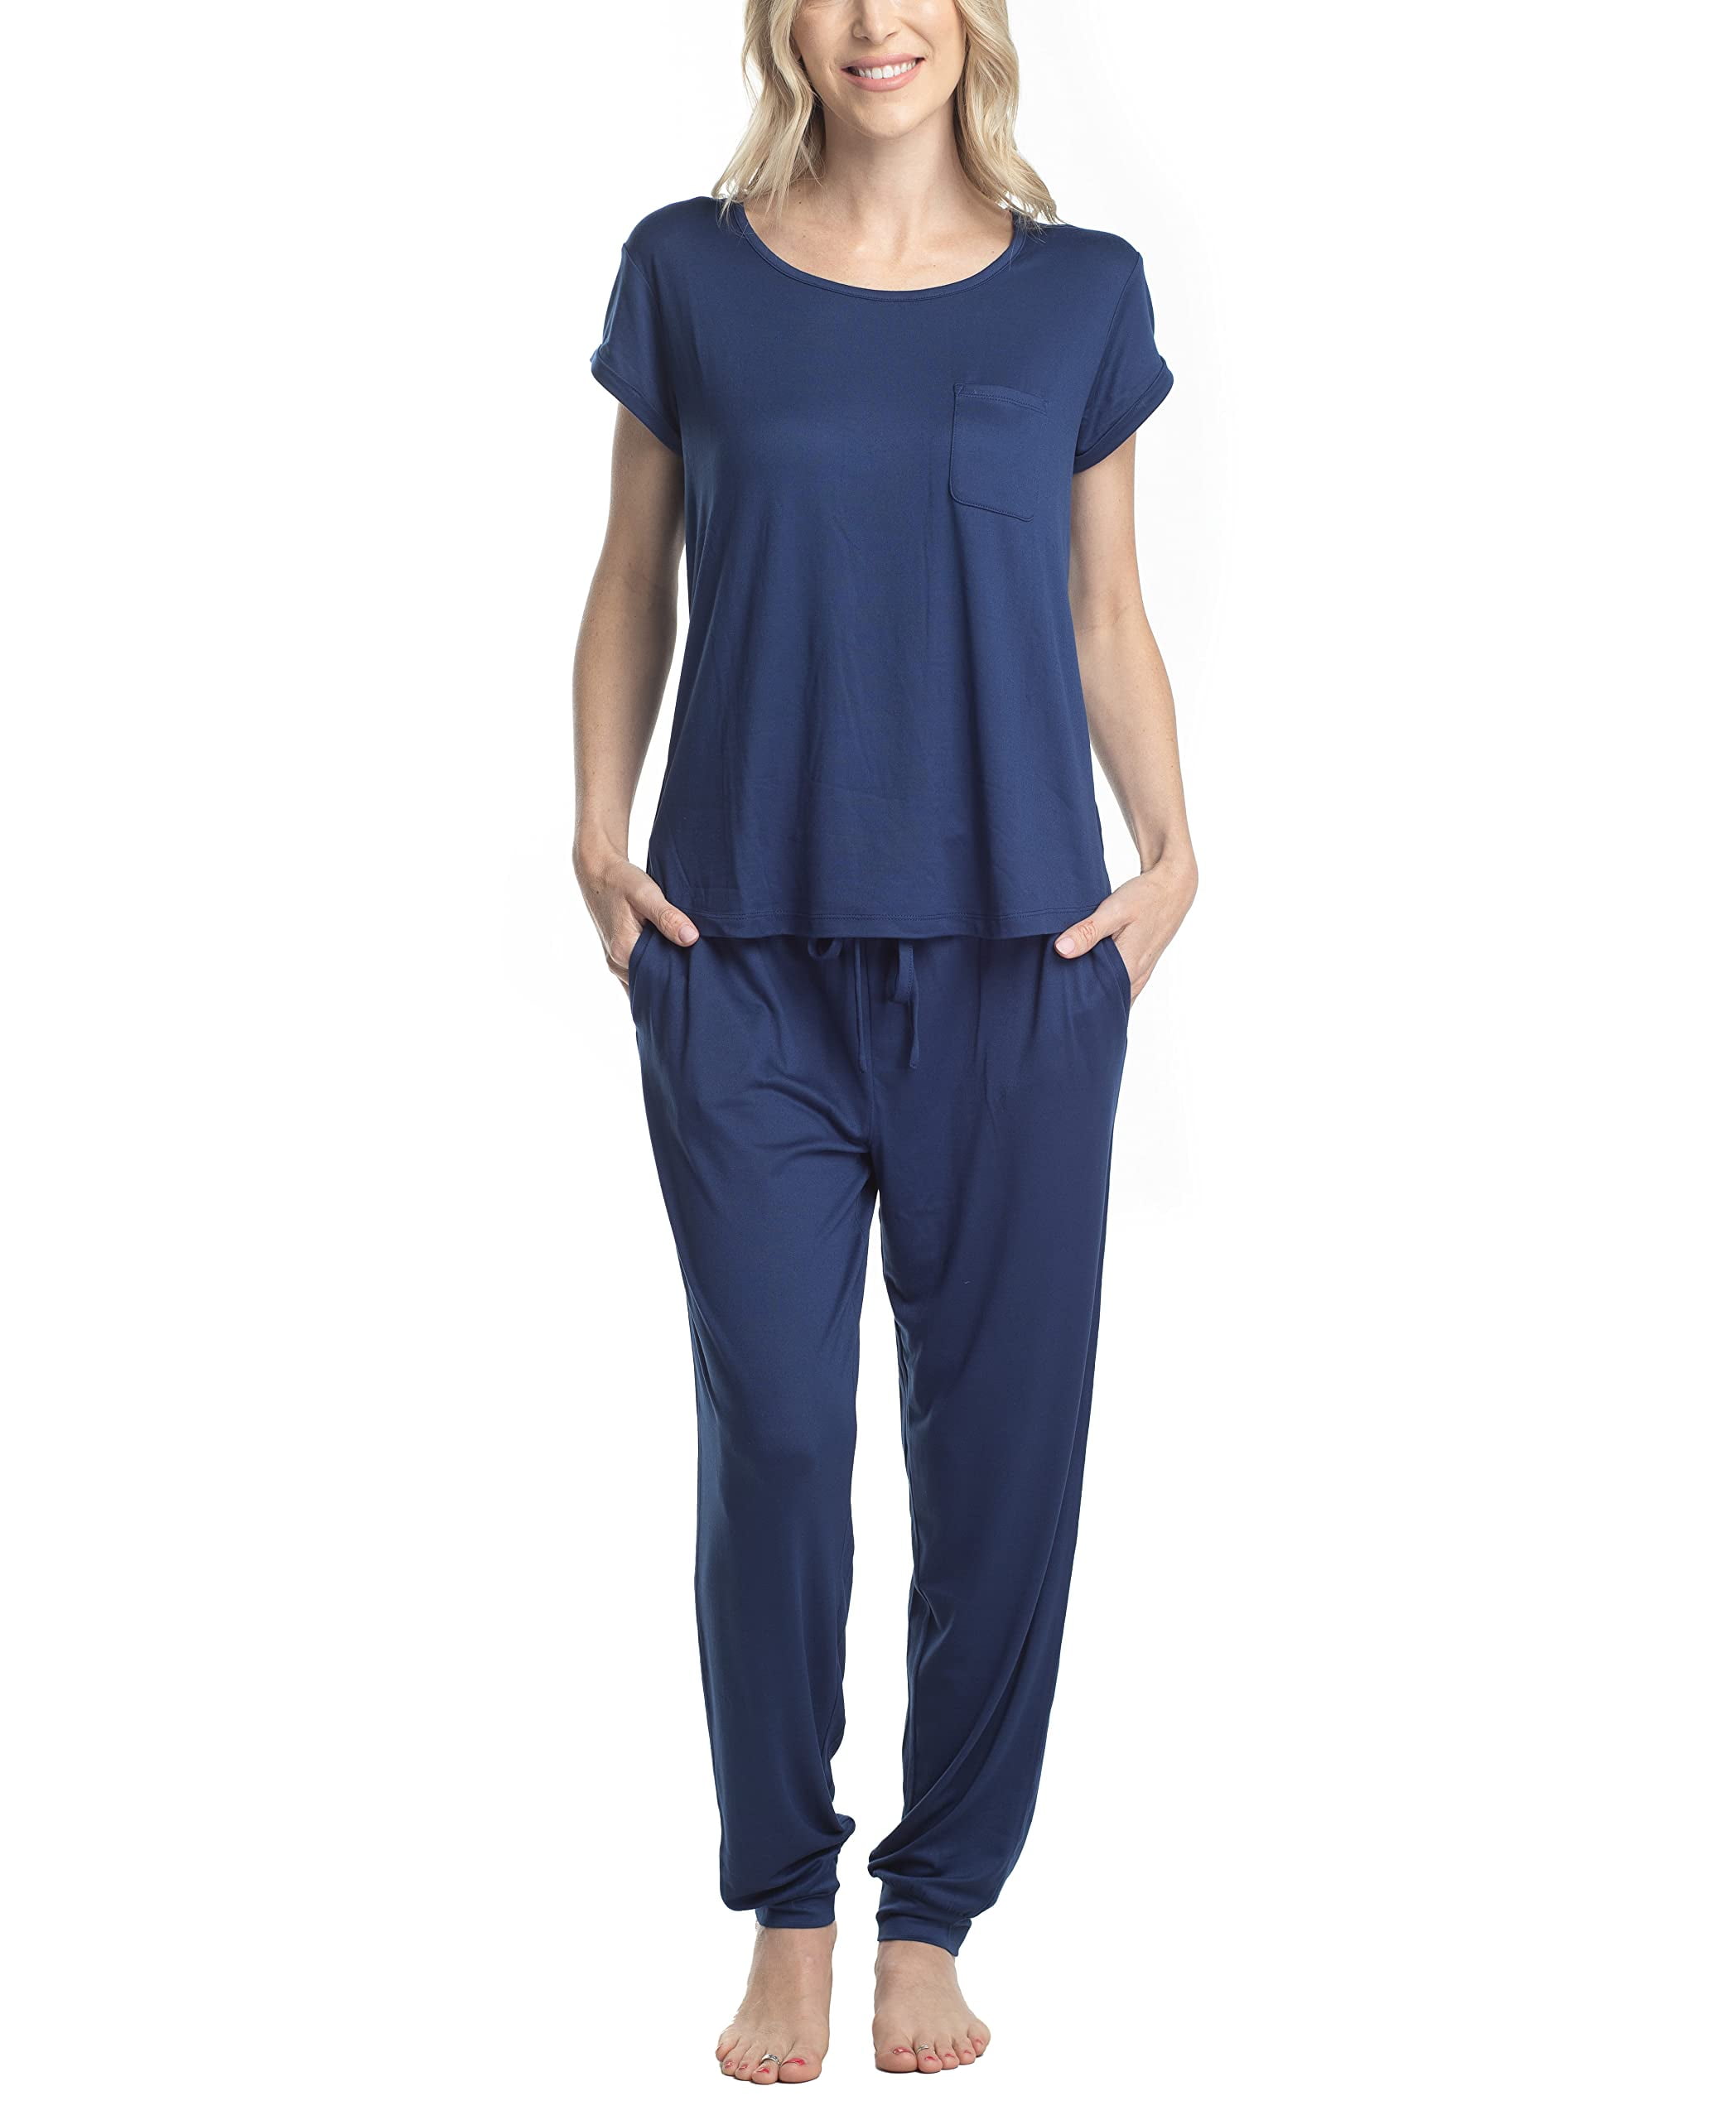 Hanes Women's Short Sleeve Top and Jogger Pajama Pants, Navy, 2X ...